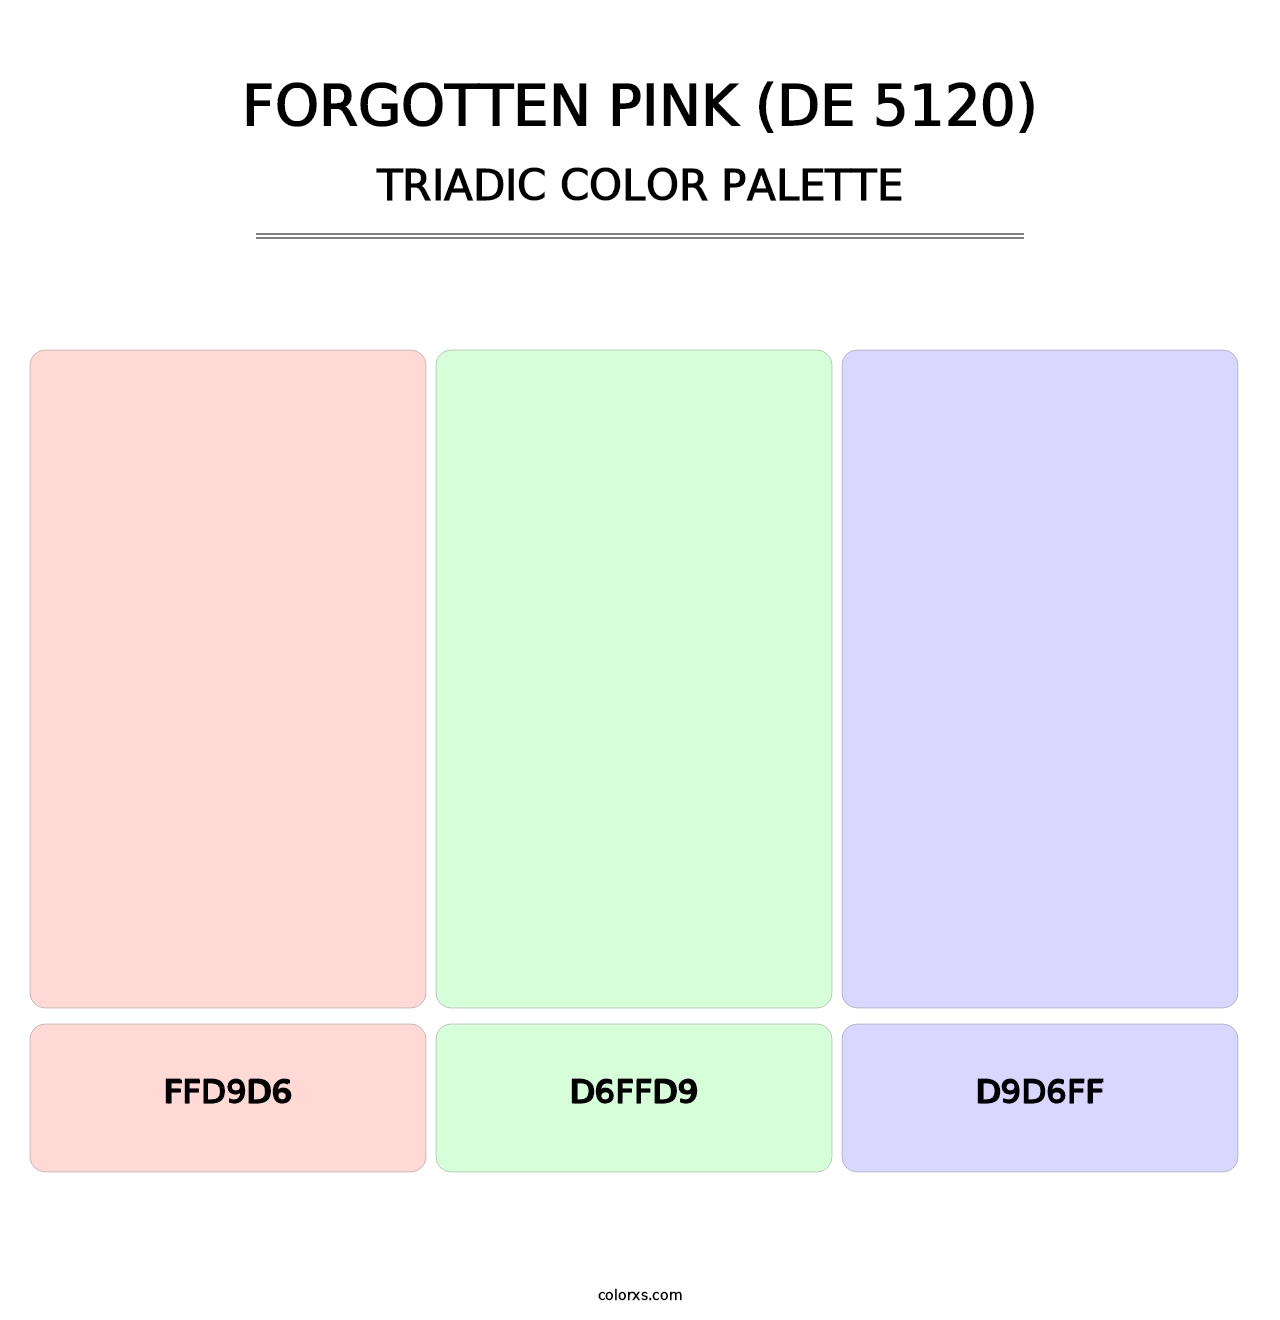 Forgotten Pink (DE 5120) - Triadic Color Palette